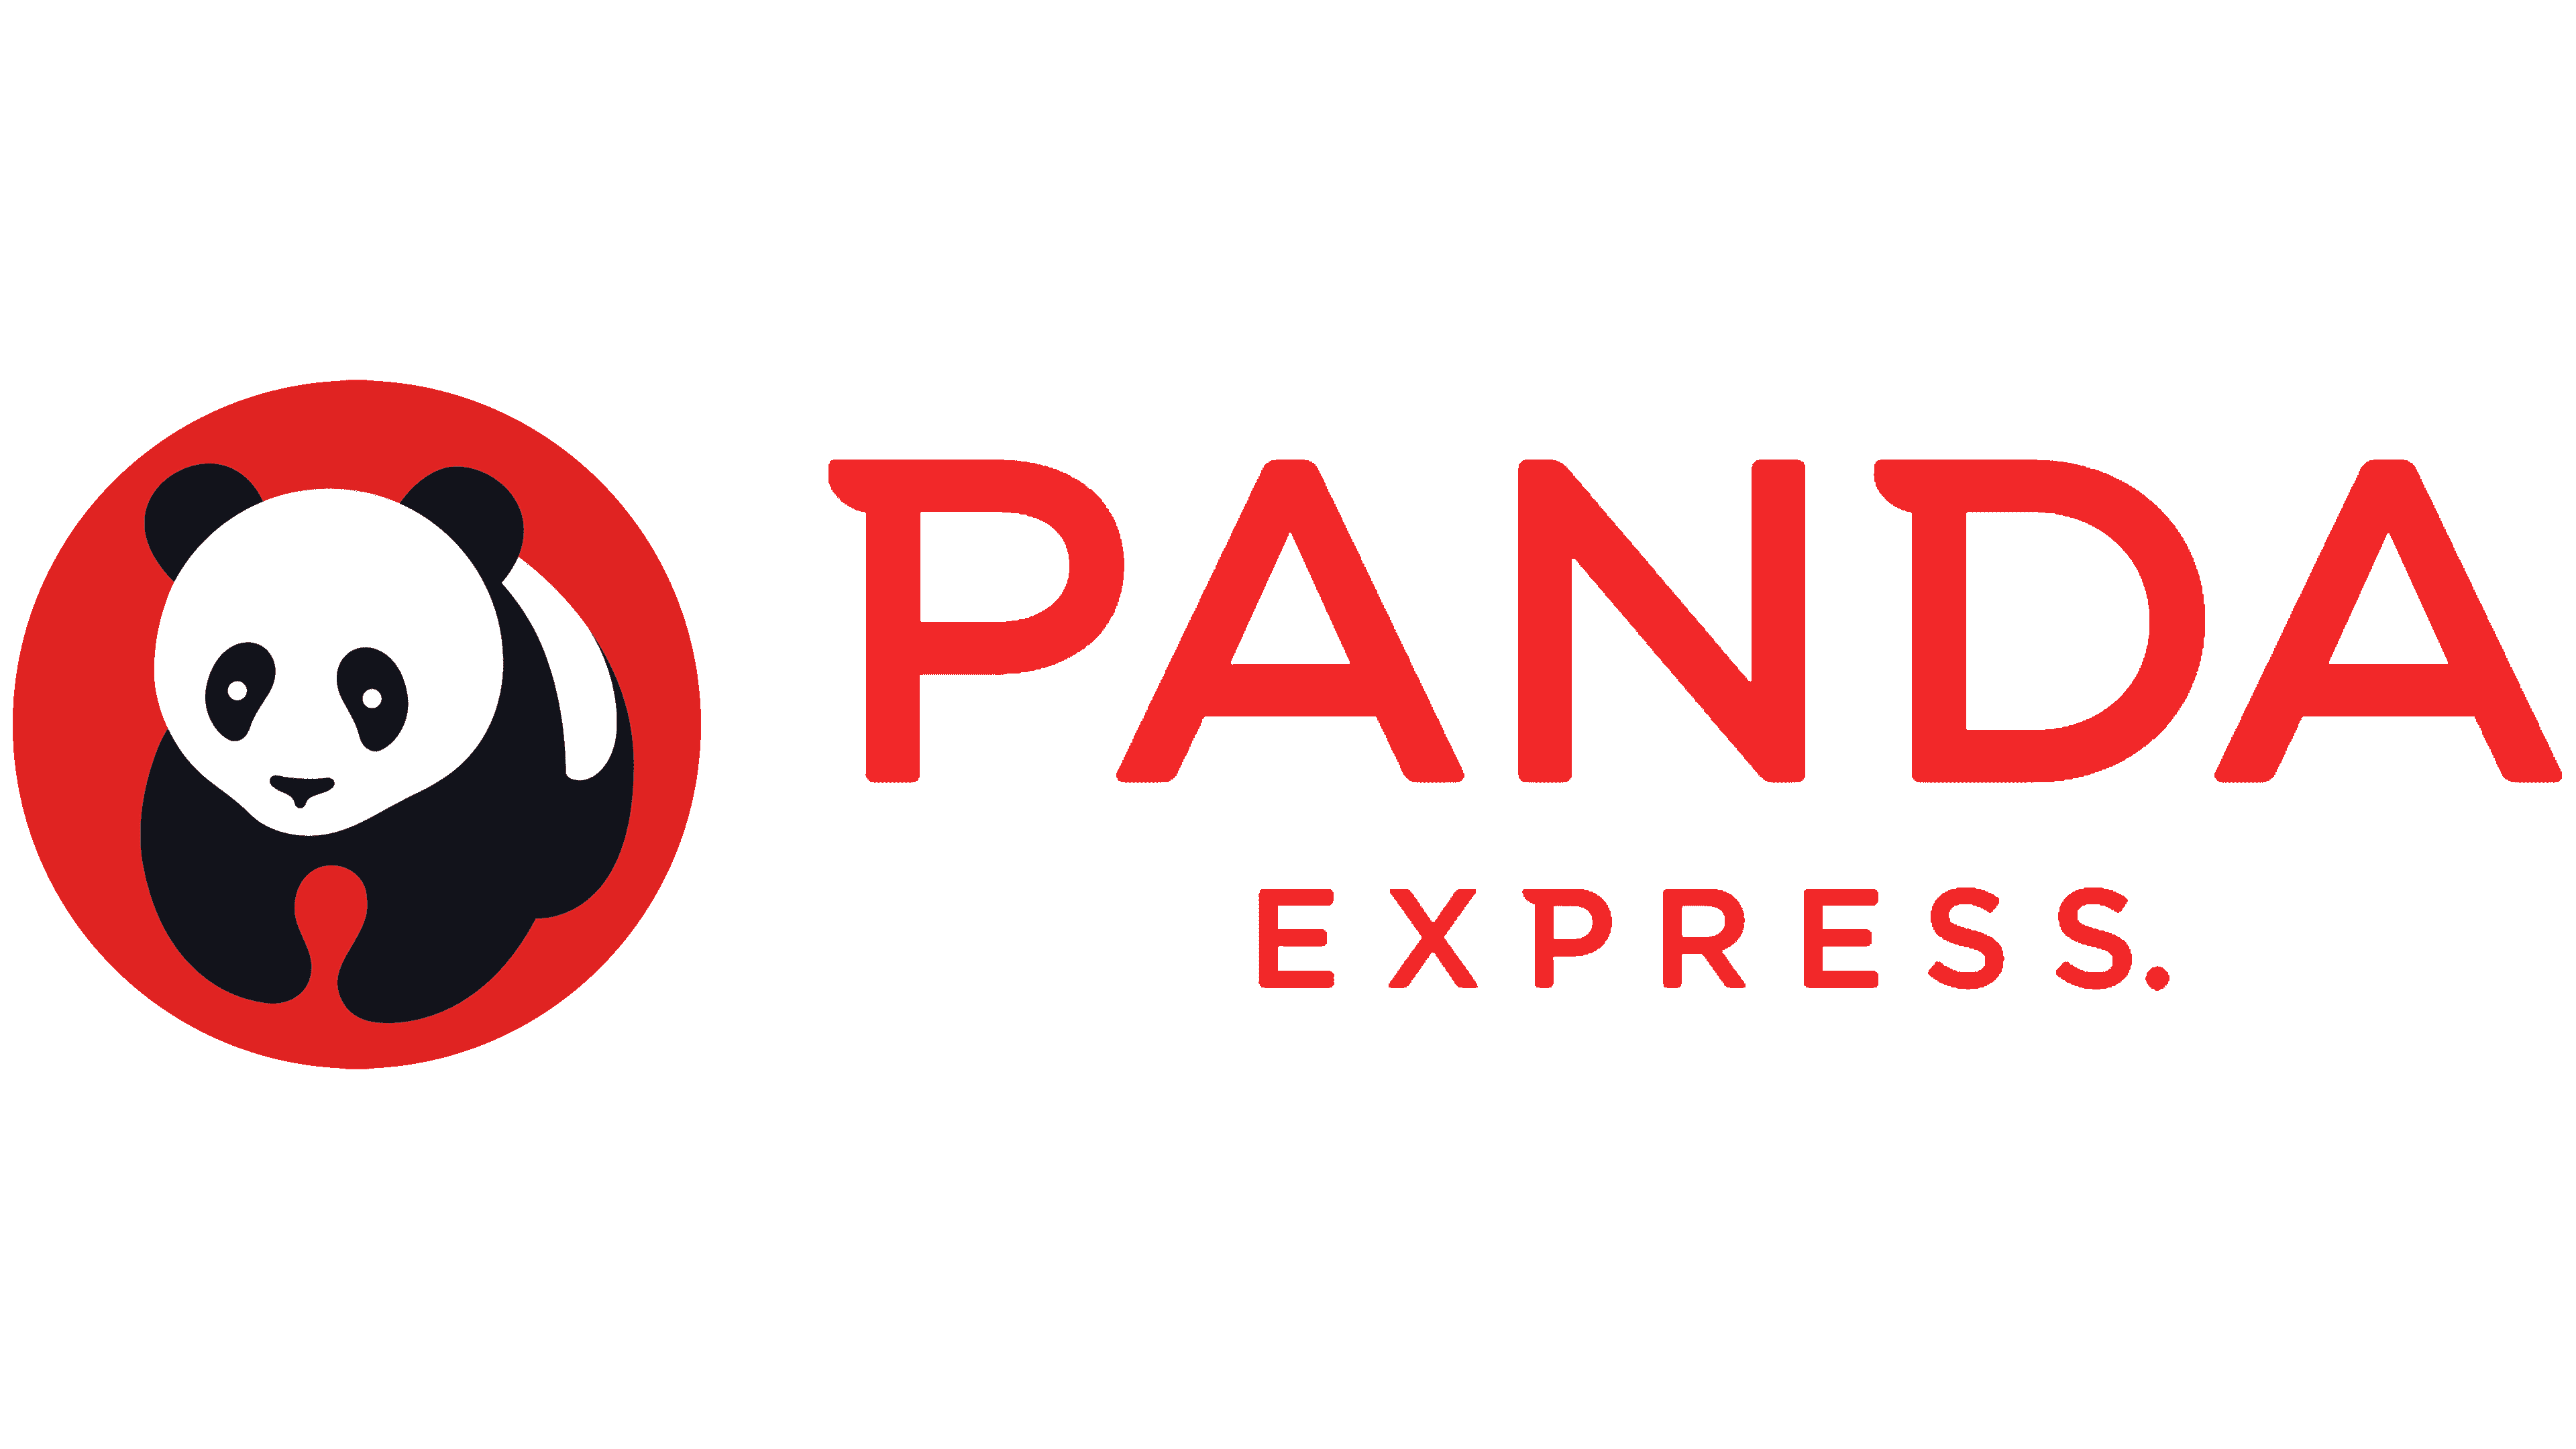 Download Panda Express Logo PNG Image With No Background vlr.eng.br